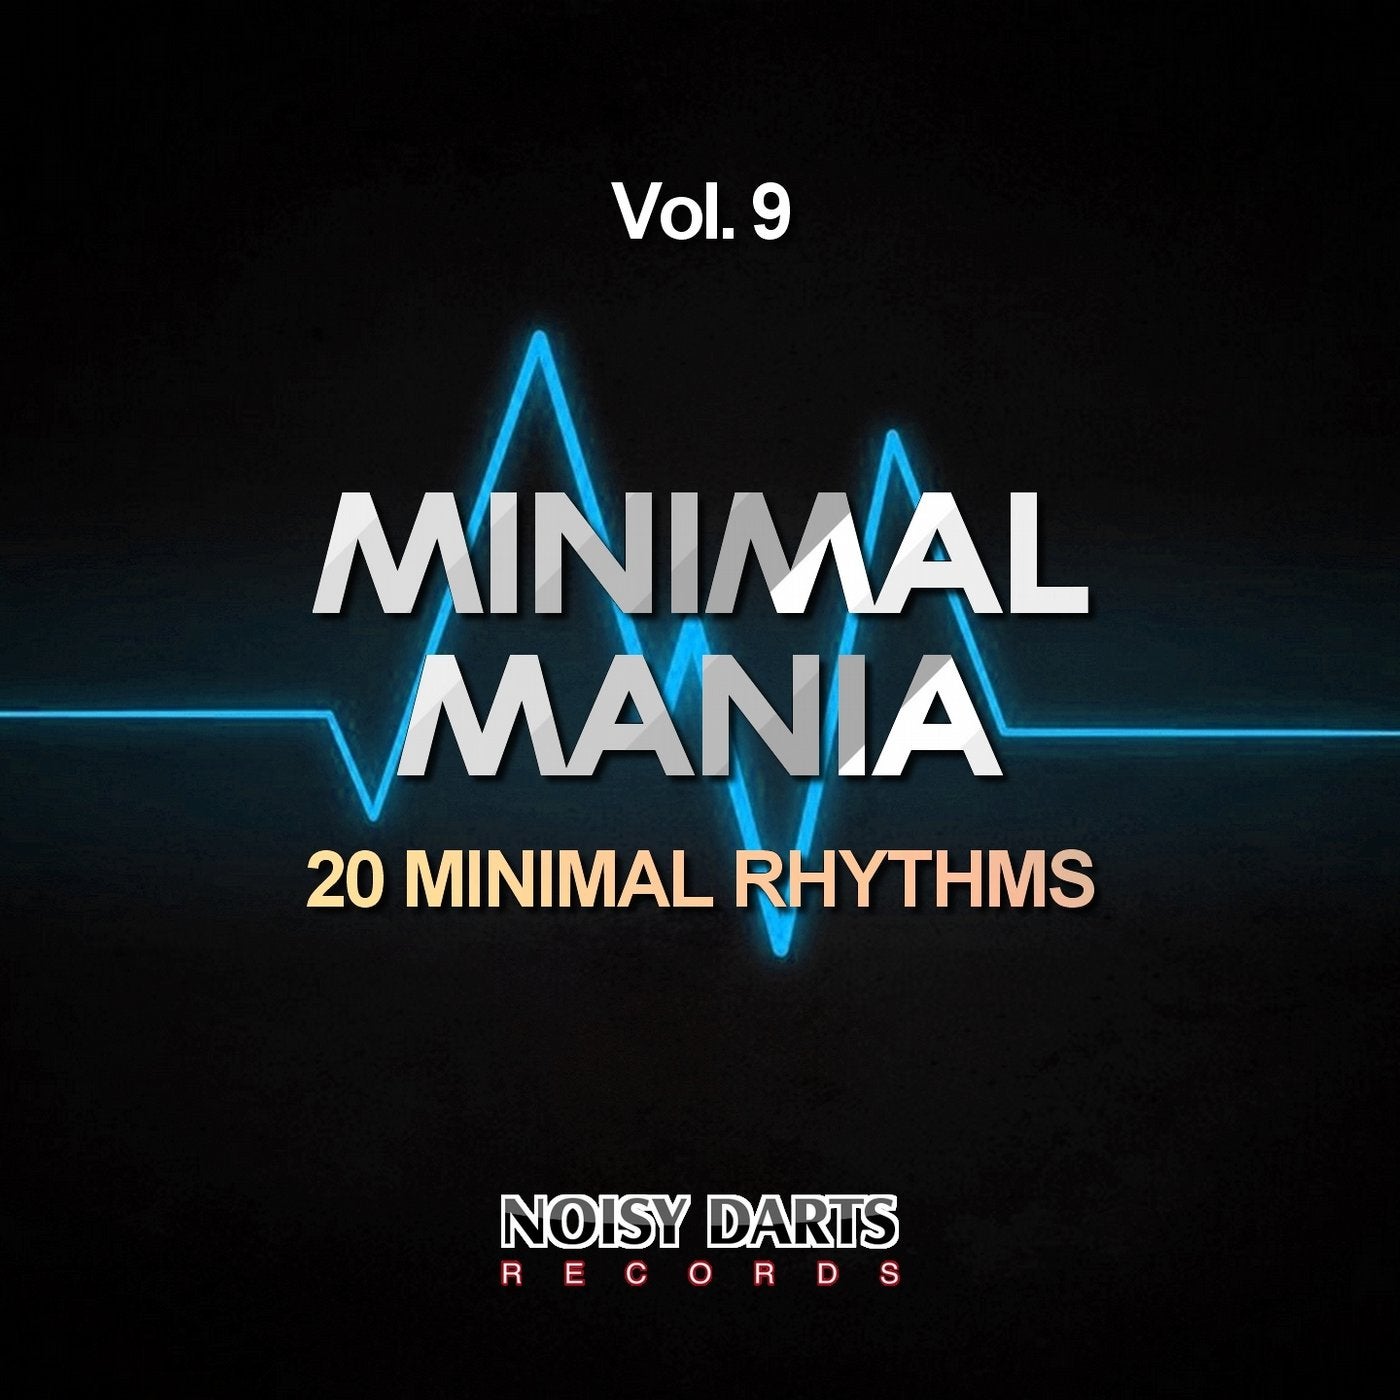 Minimal Mania, Vol. 9 (20 Minimal Rhythms)